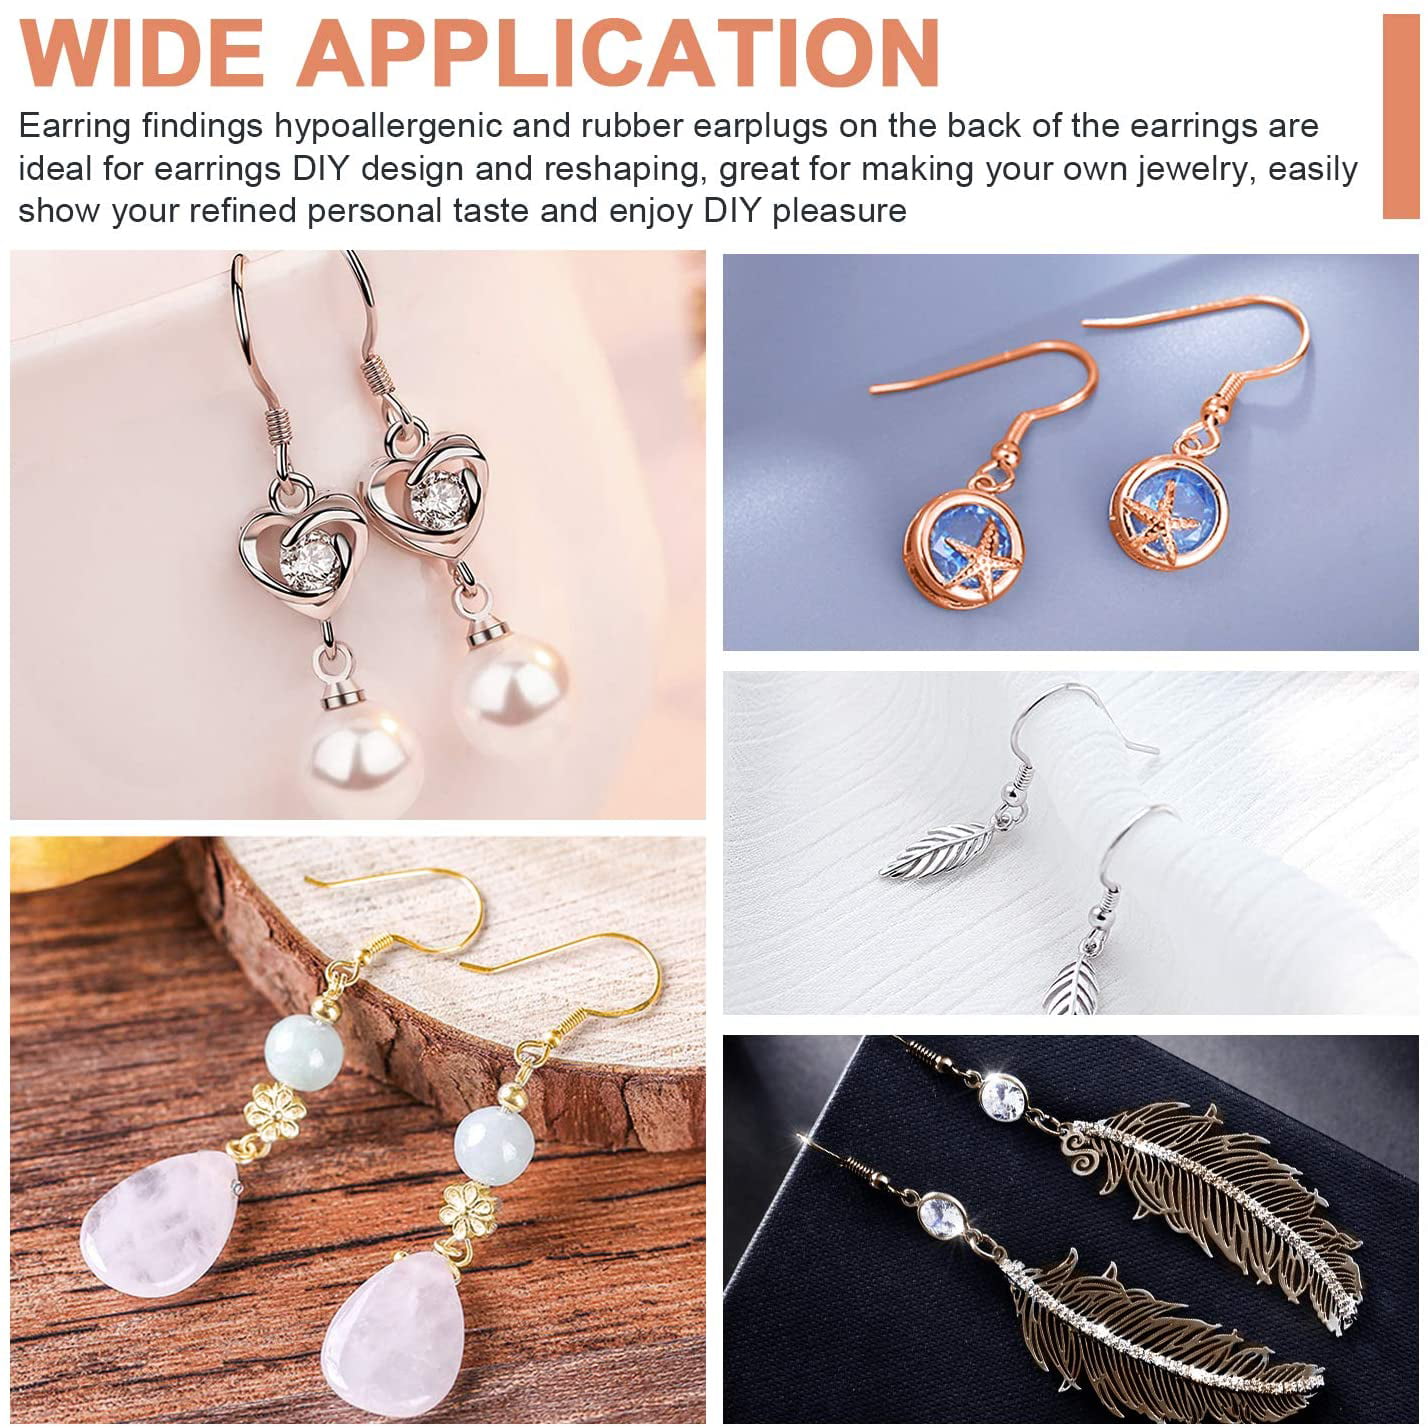 Vivixin 120pcs/60pais Earring Hooks, 925 Sterling Silver Hypoallergenic Earring Hooks for Jewelry Making Kit Supplies, Clear Rubber Earring Safety